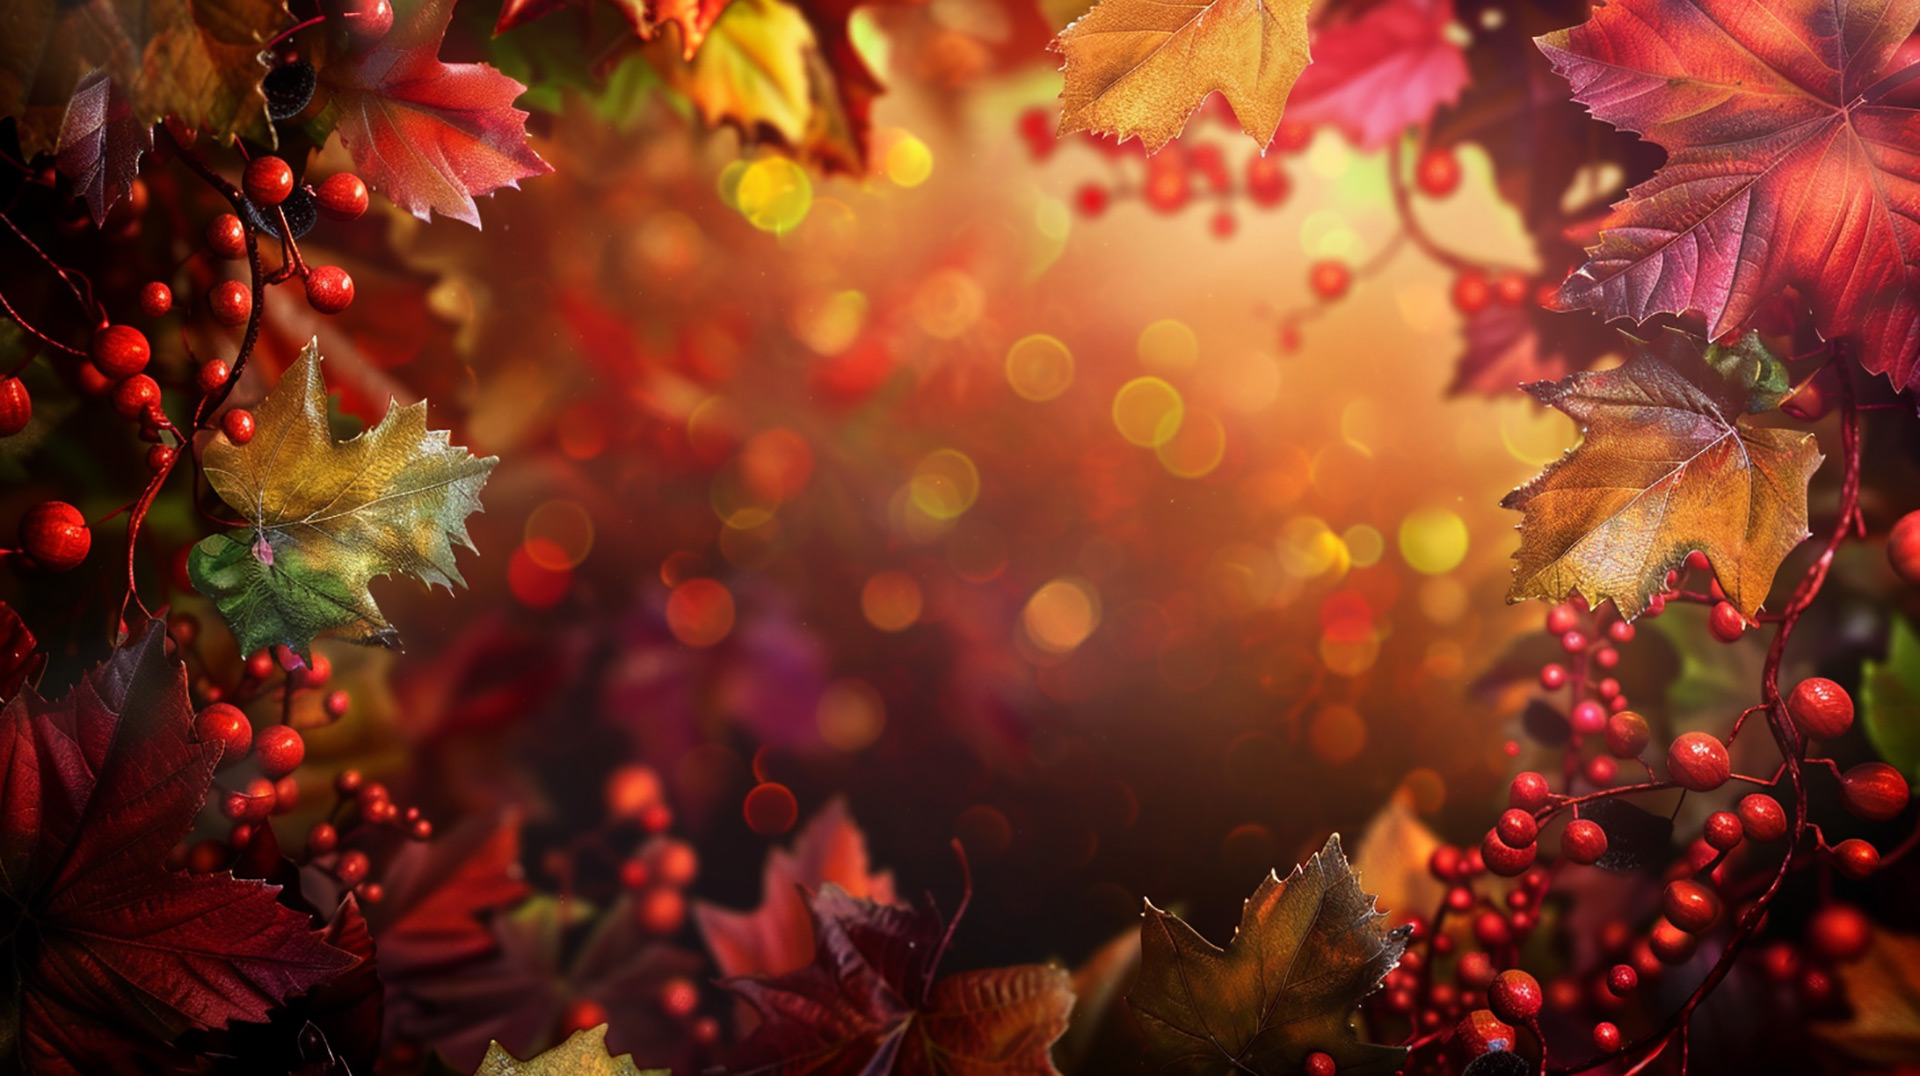 Autumn Reflections on Lake Desktop Wallpaper